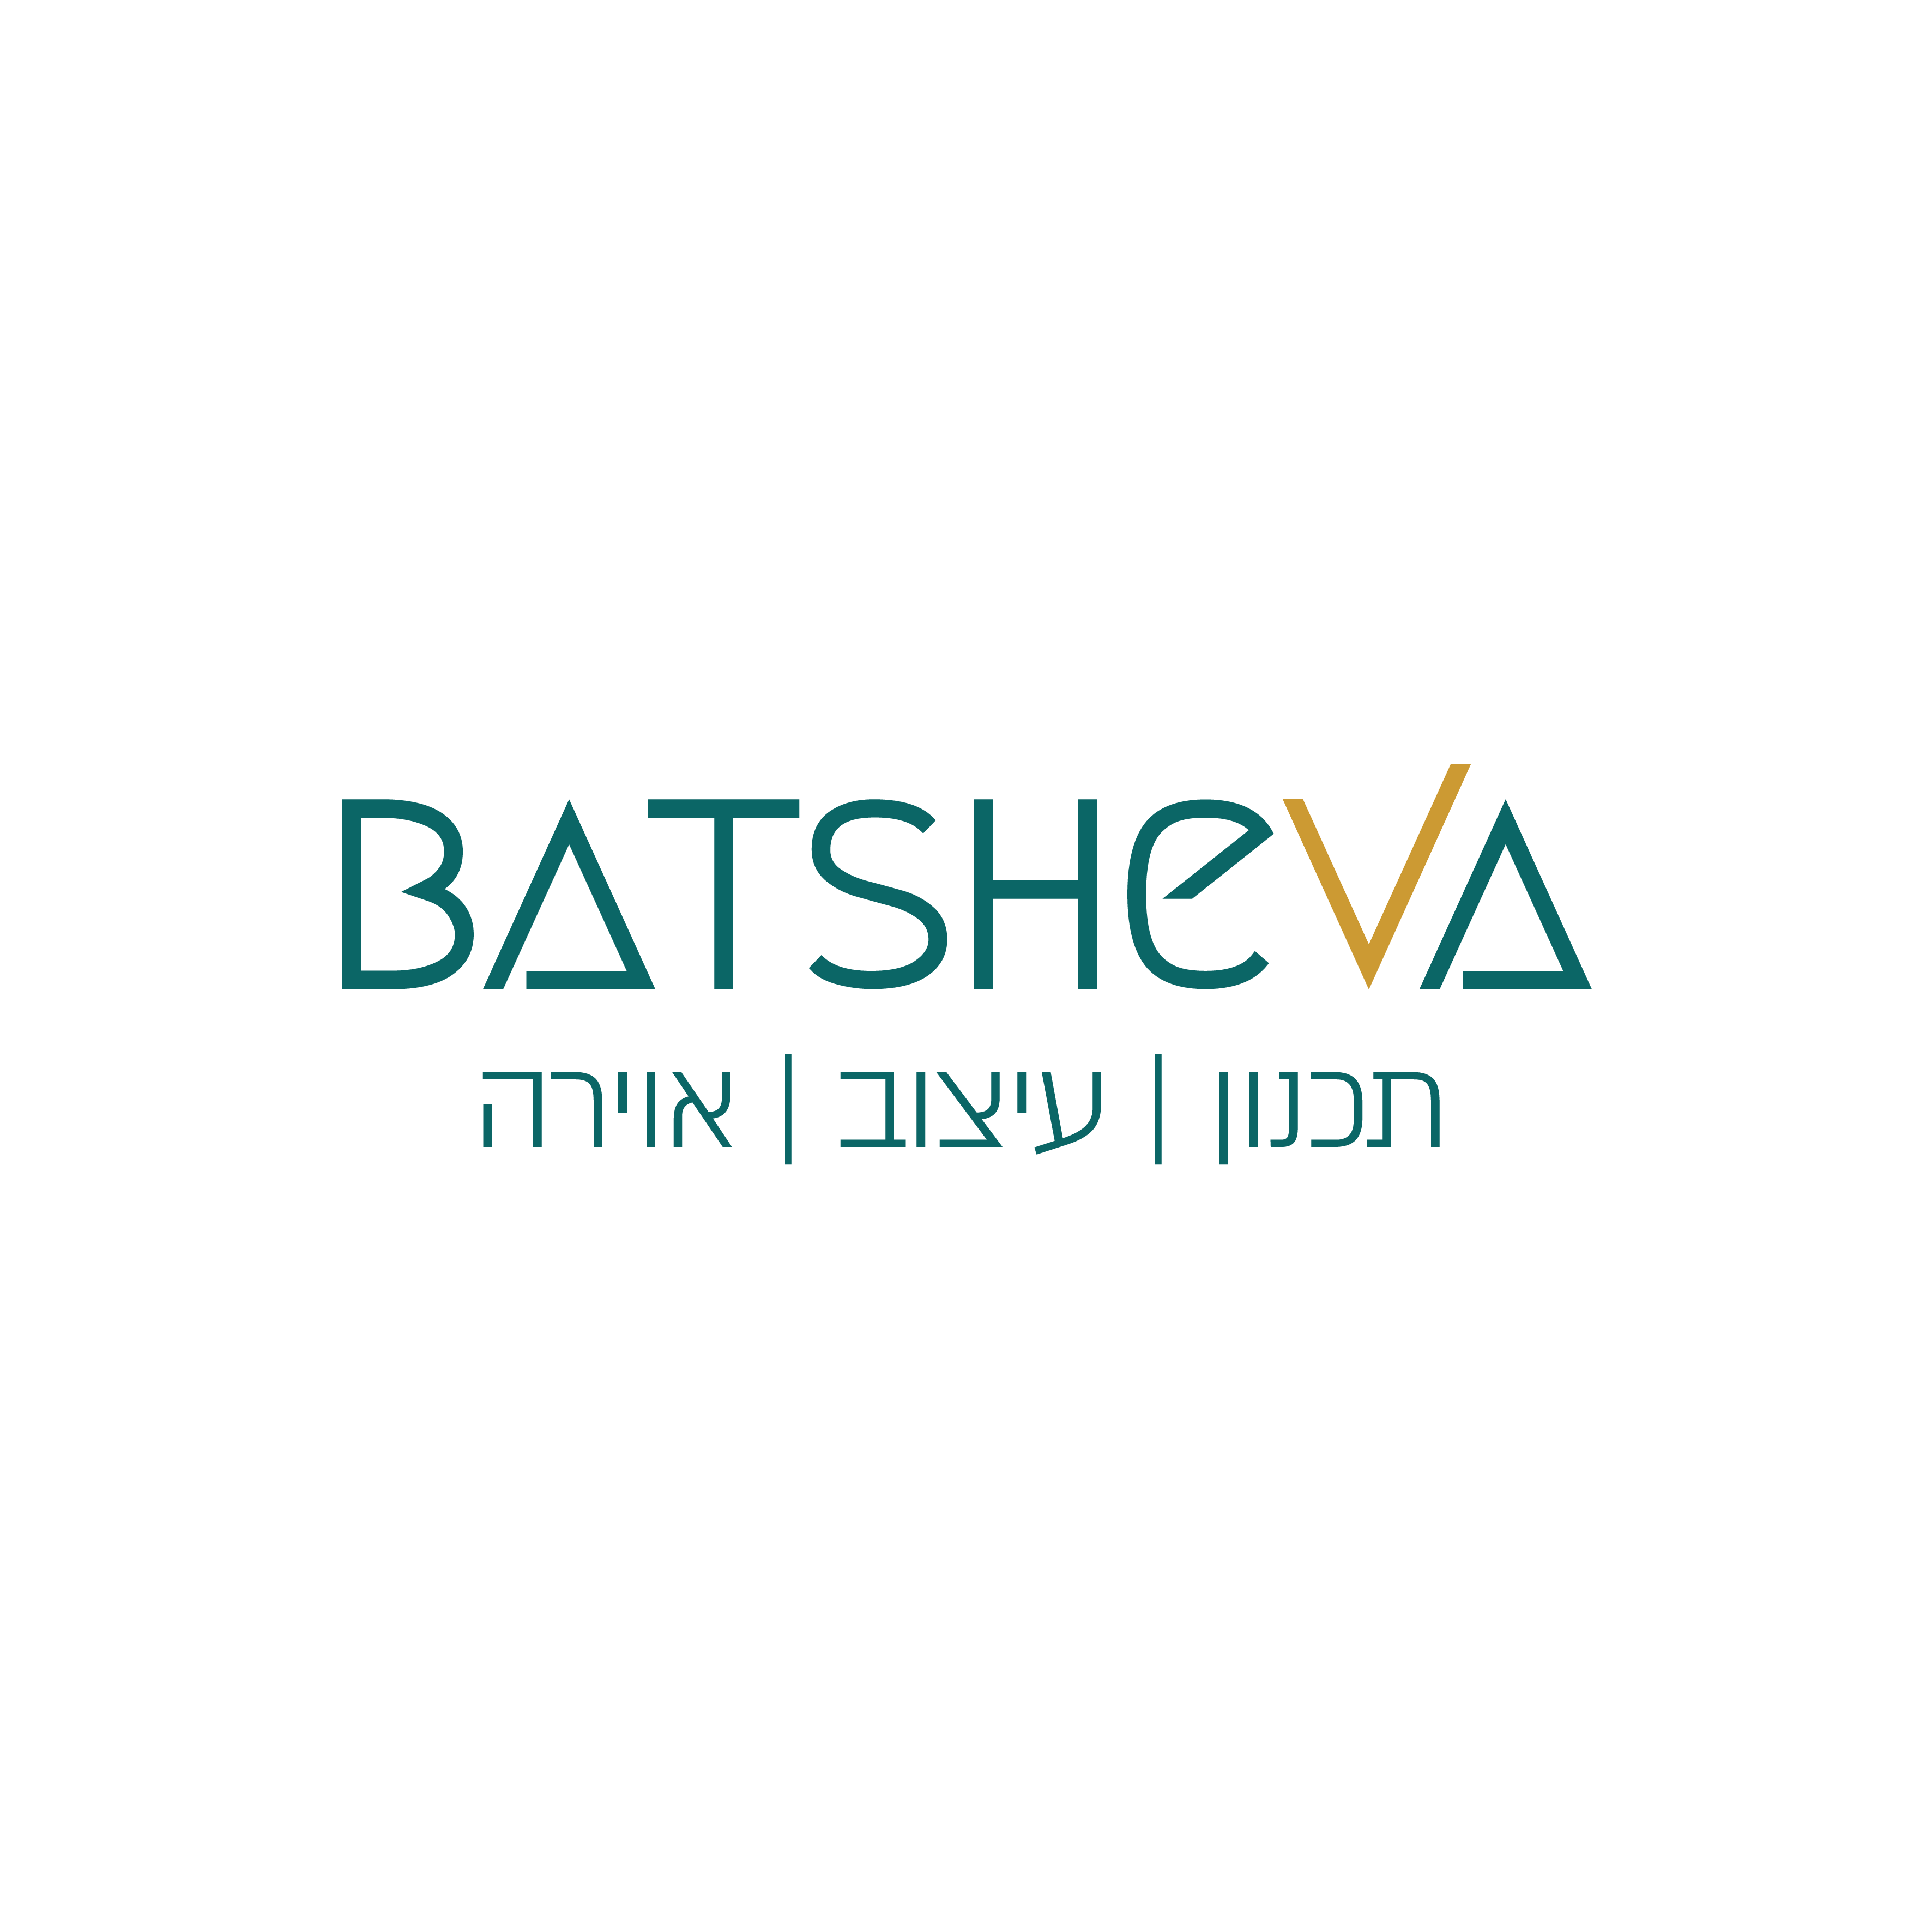 Batsheva.png